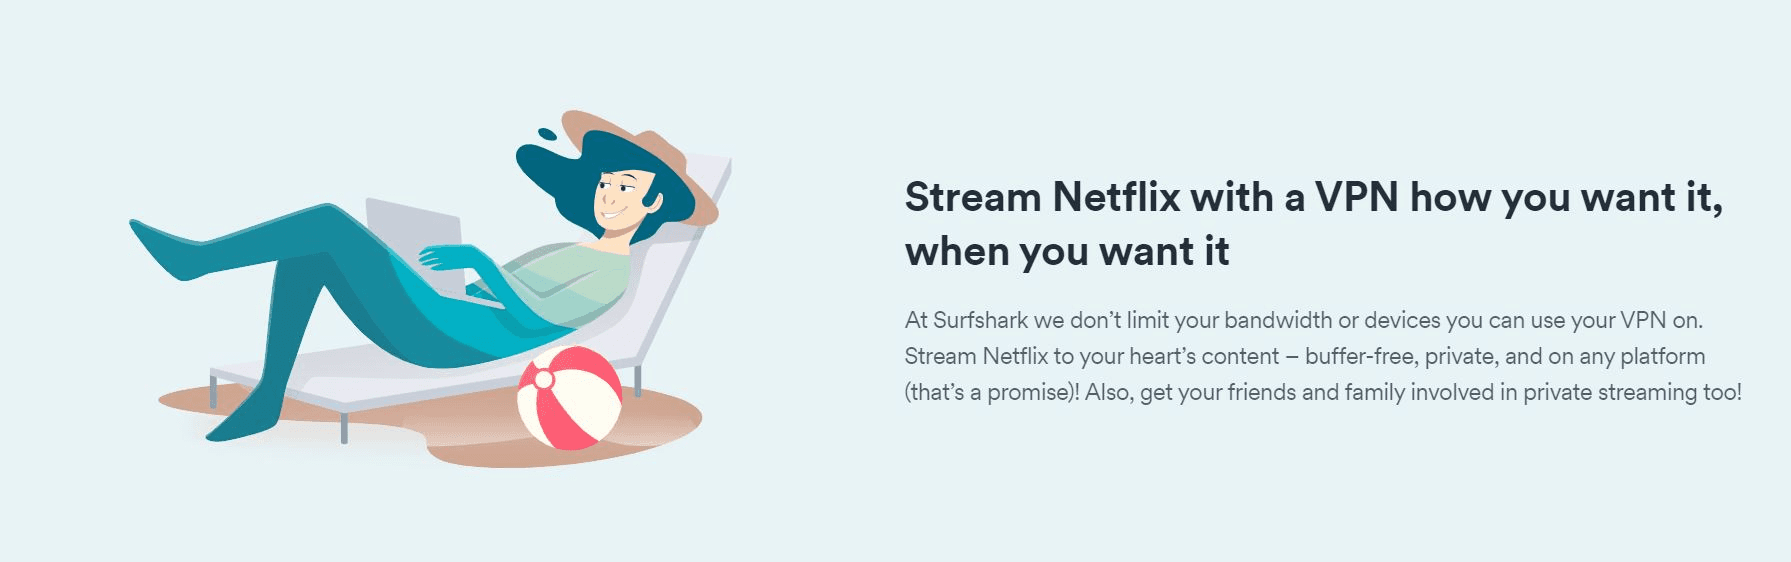 Surfshark helps you stream Netflix